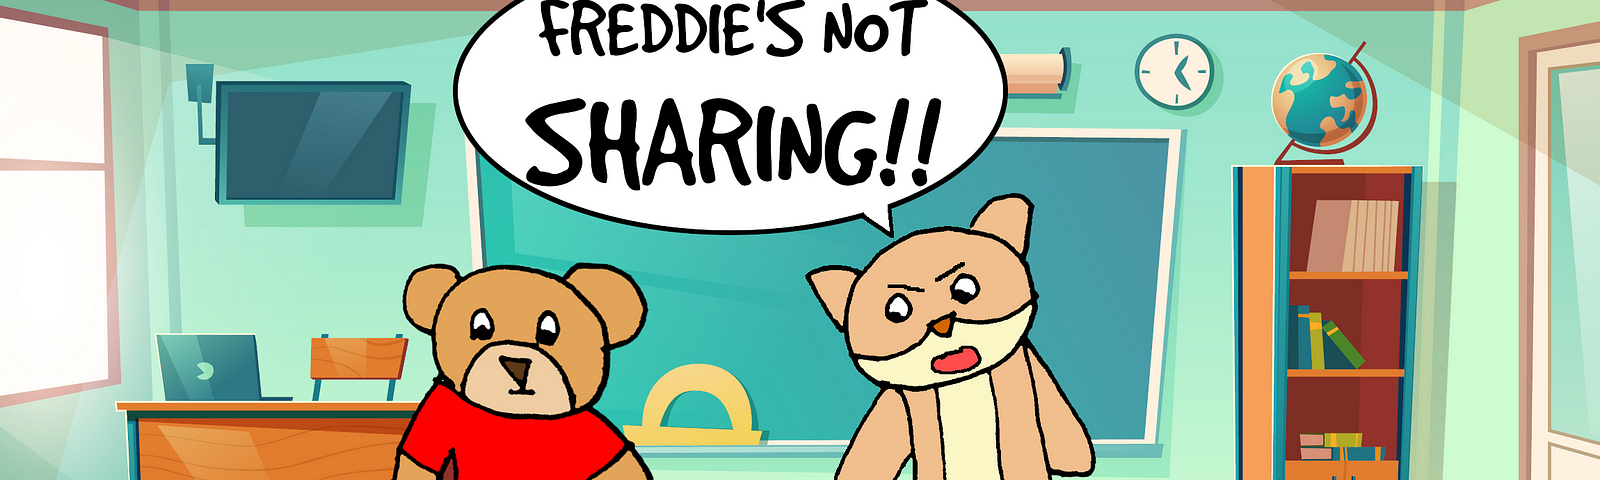 “Freddie’s not SHARING!!”